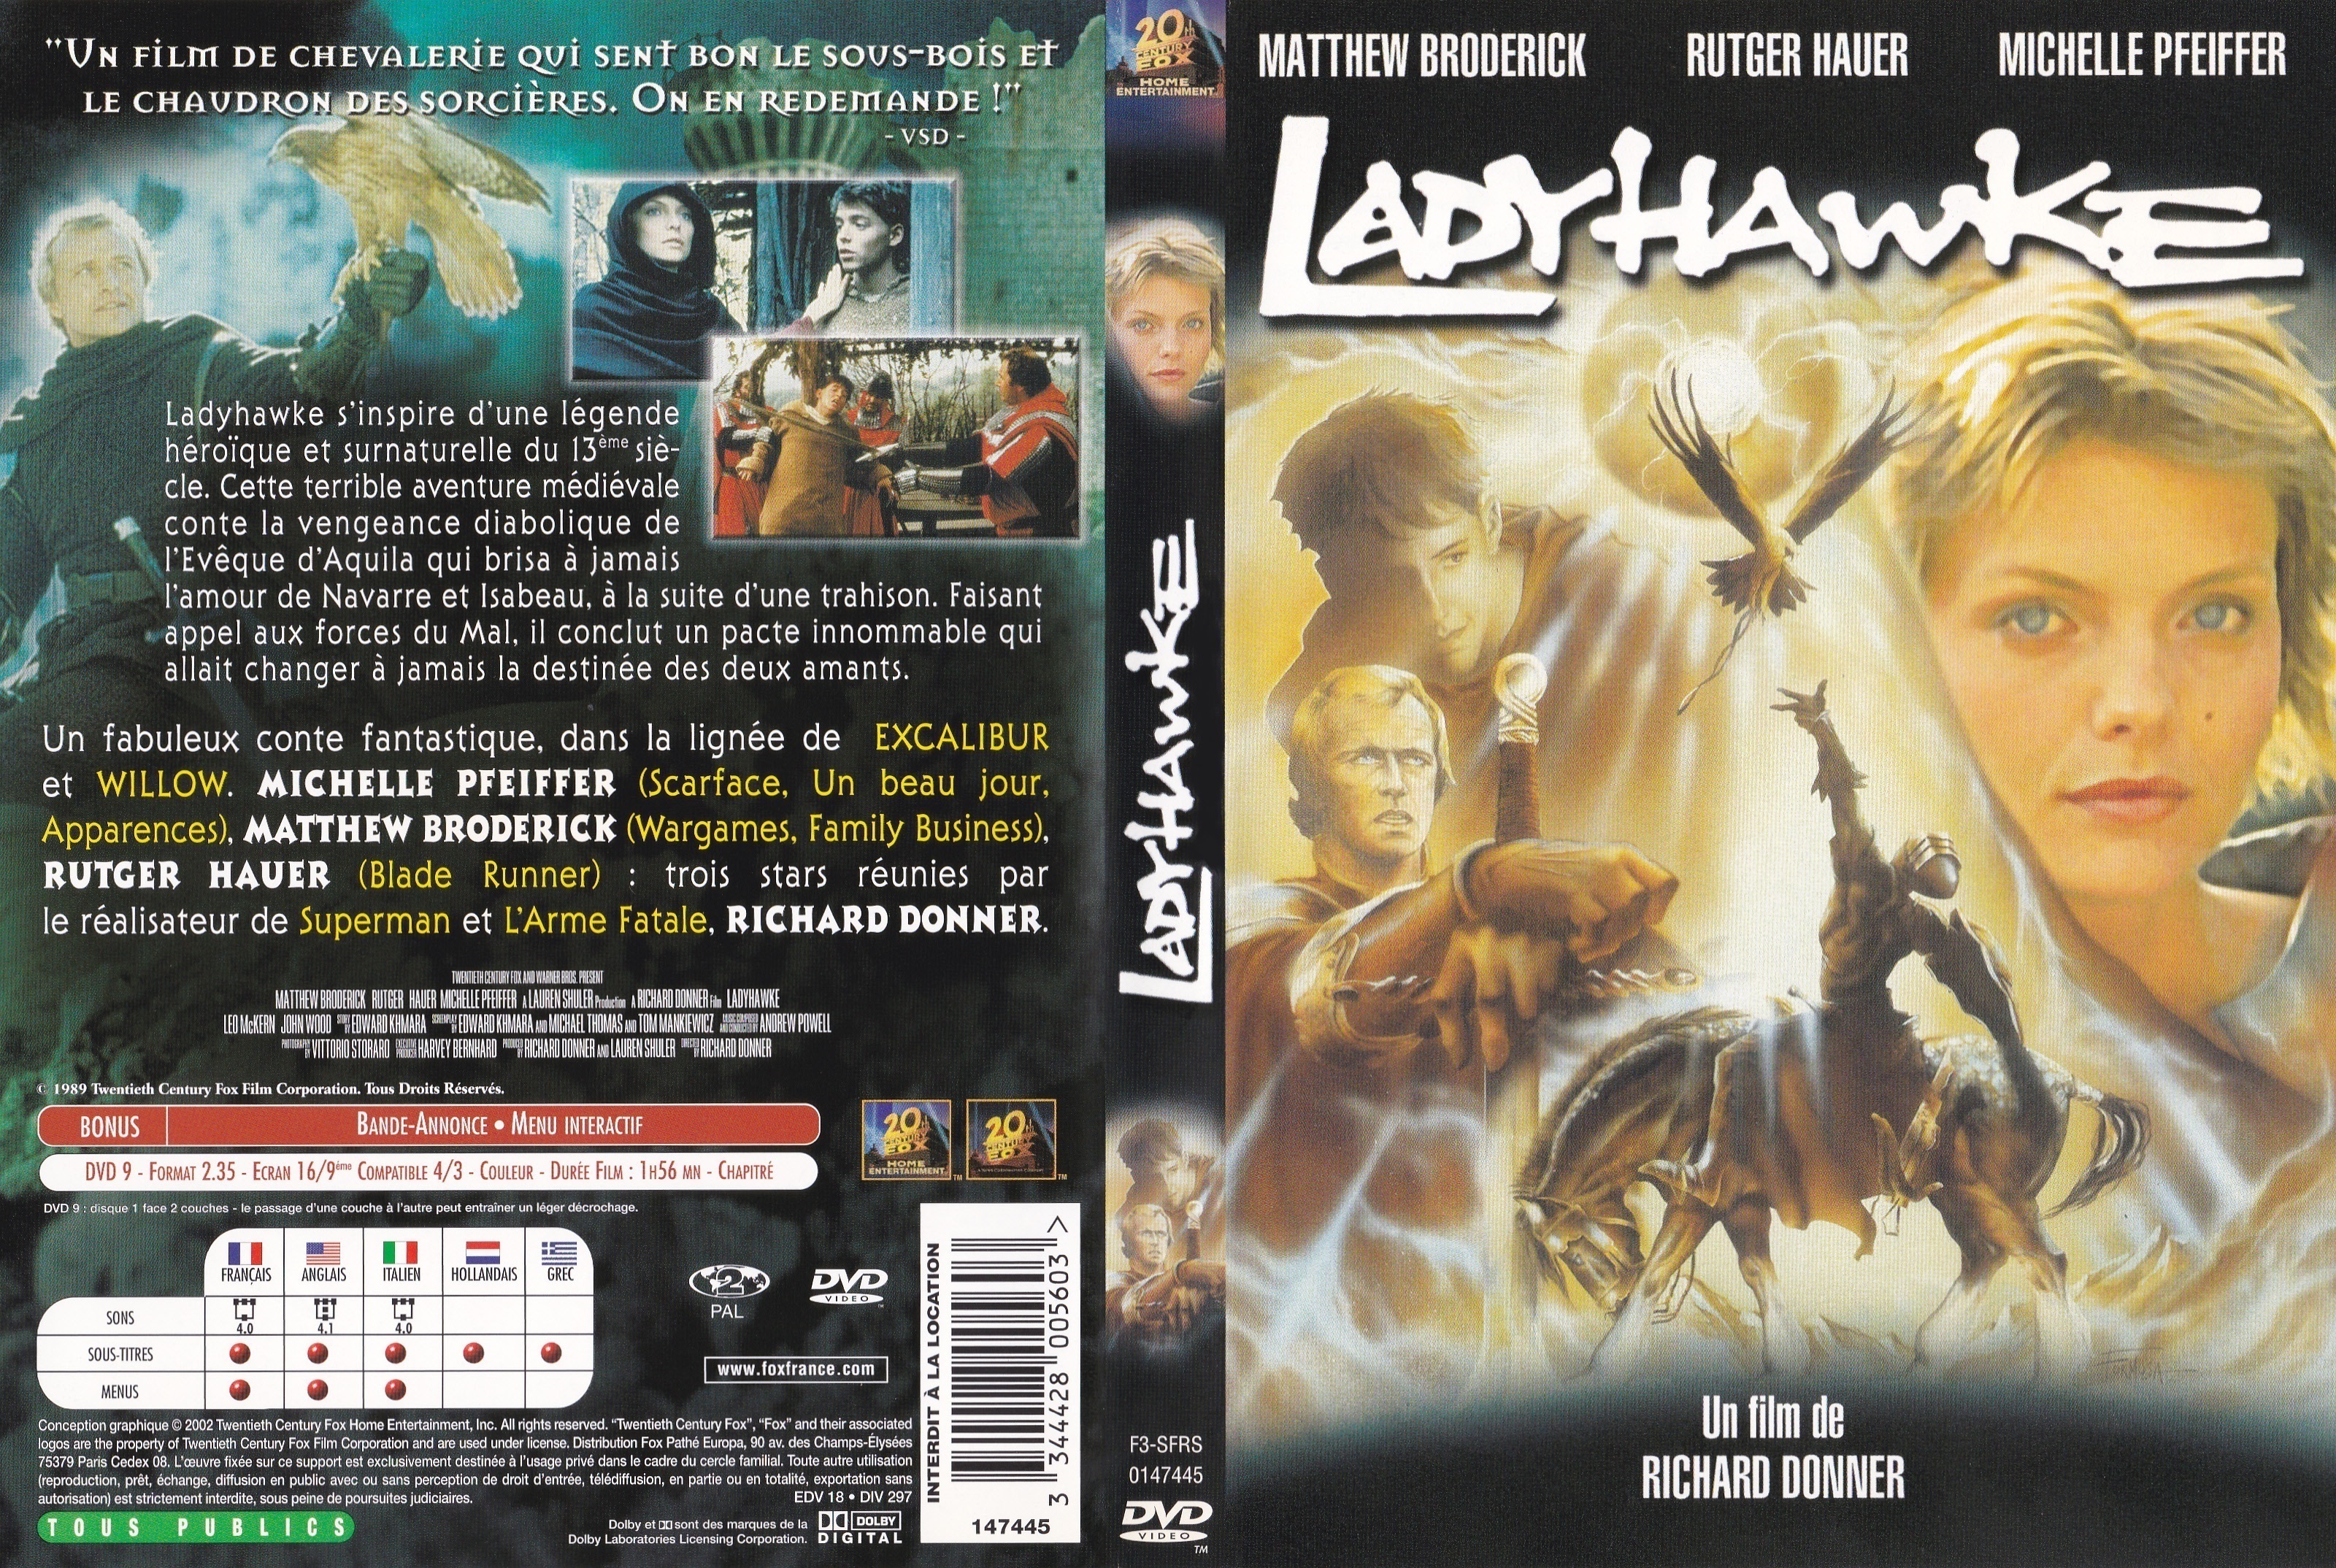 Jaquette DVD Ladyhawke v2